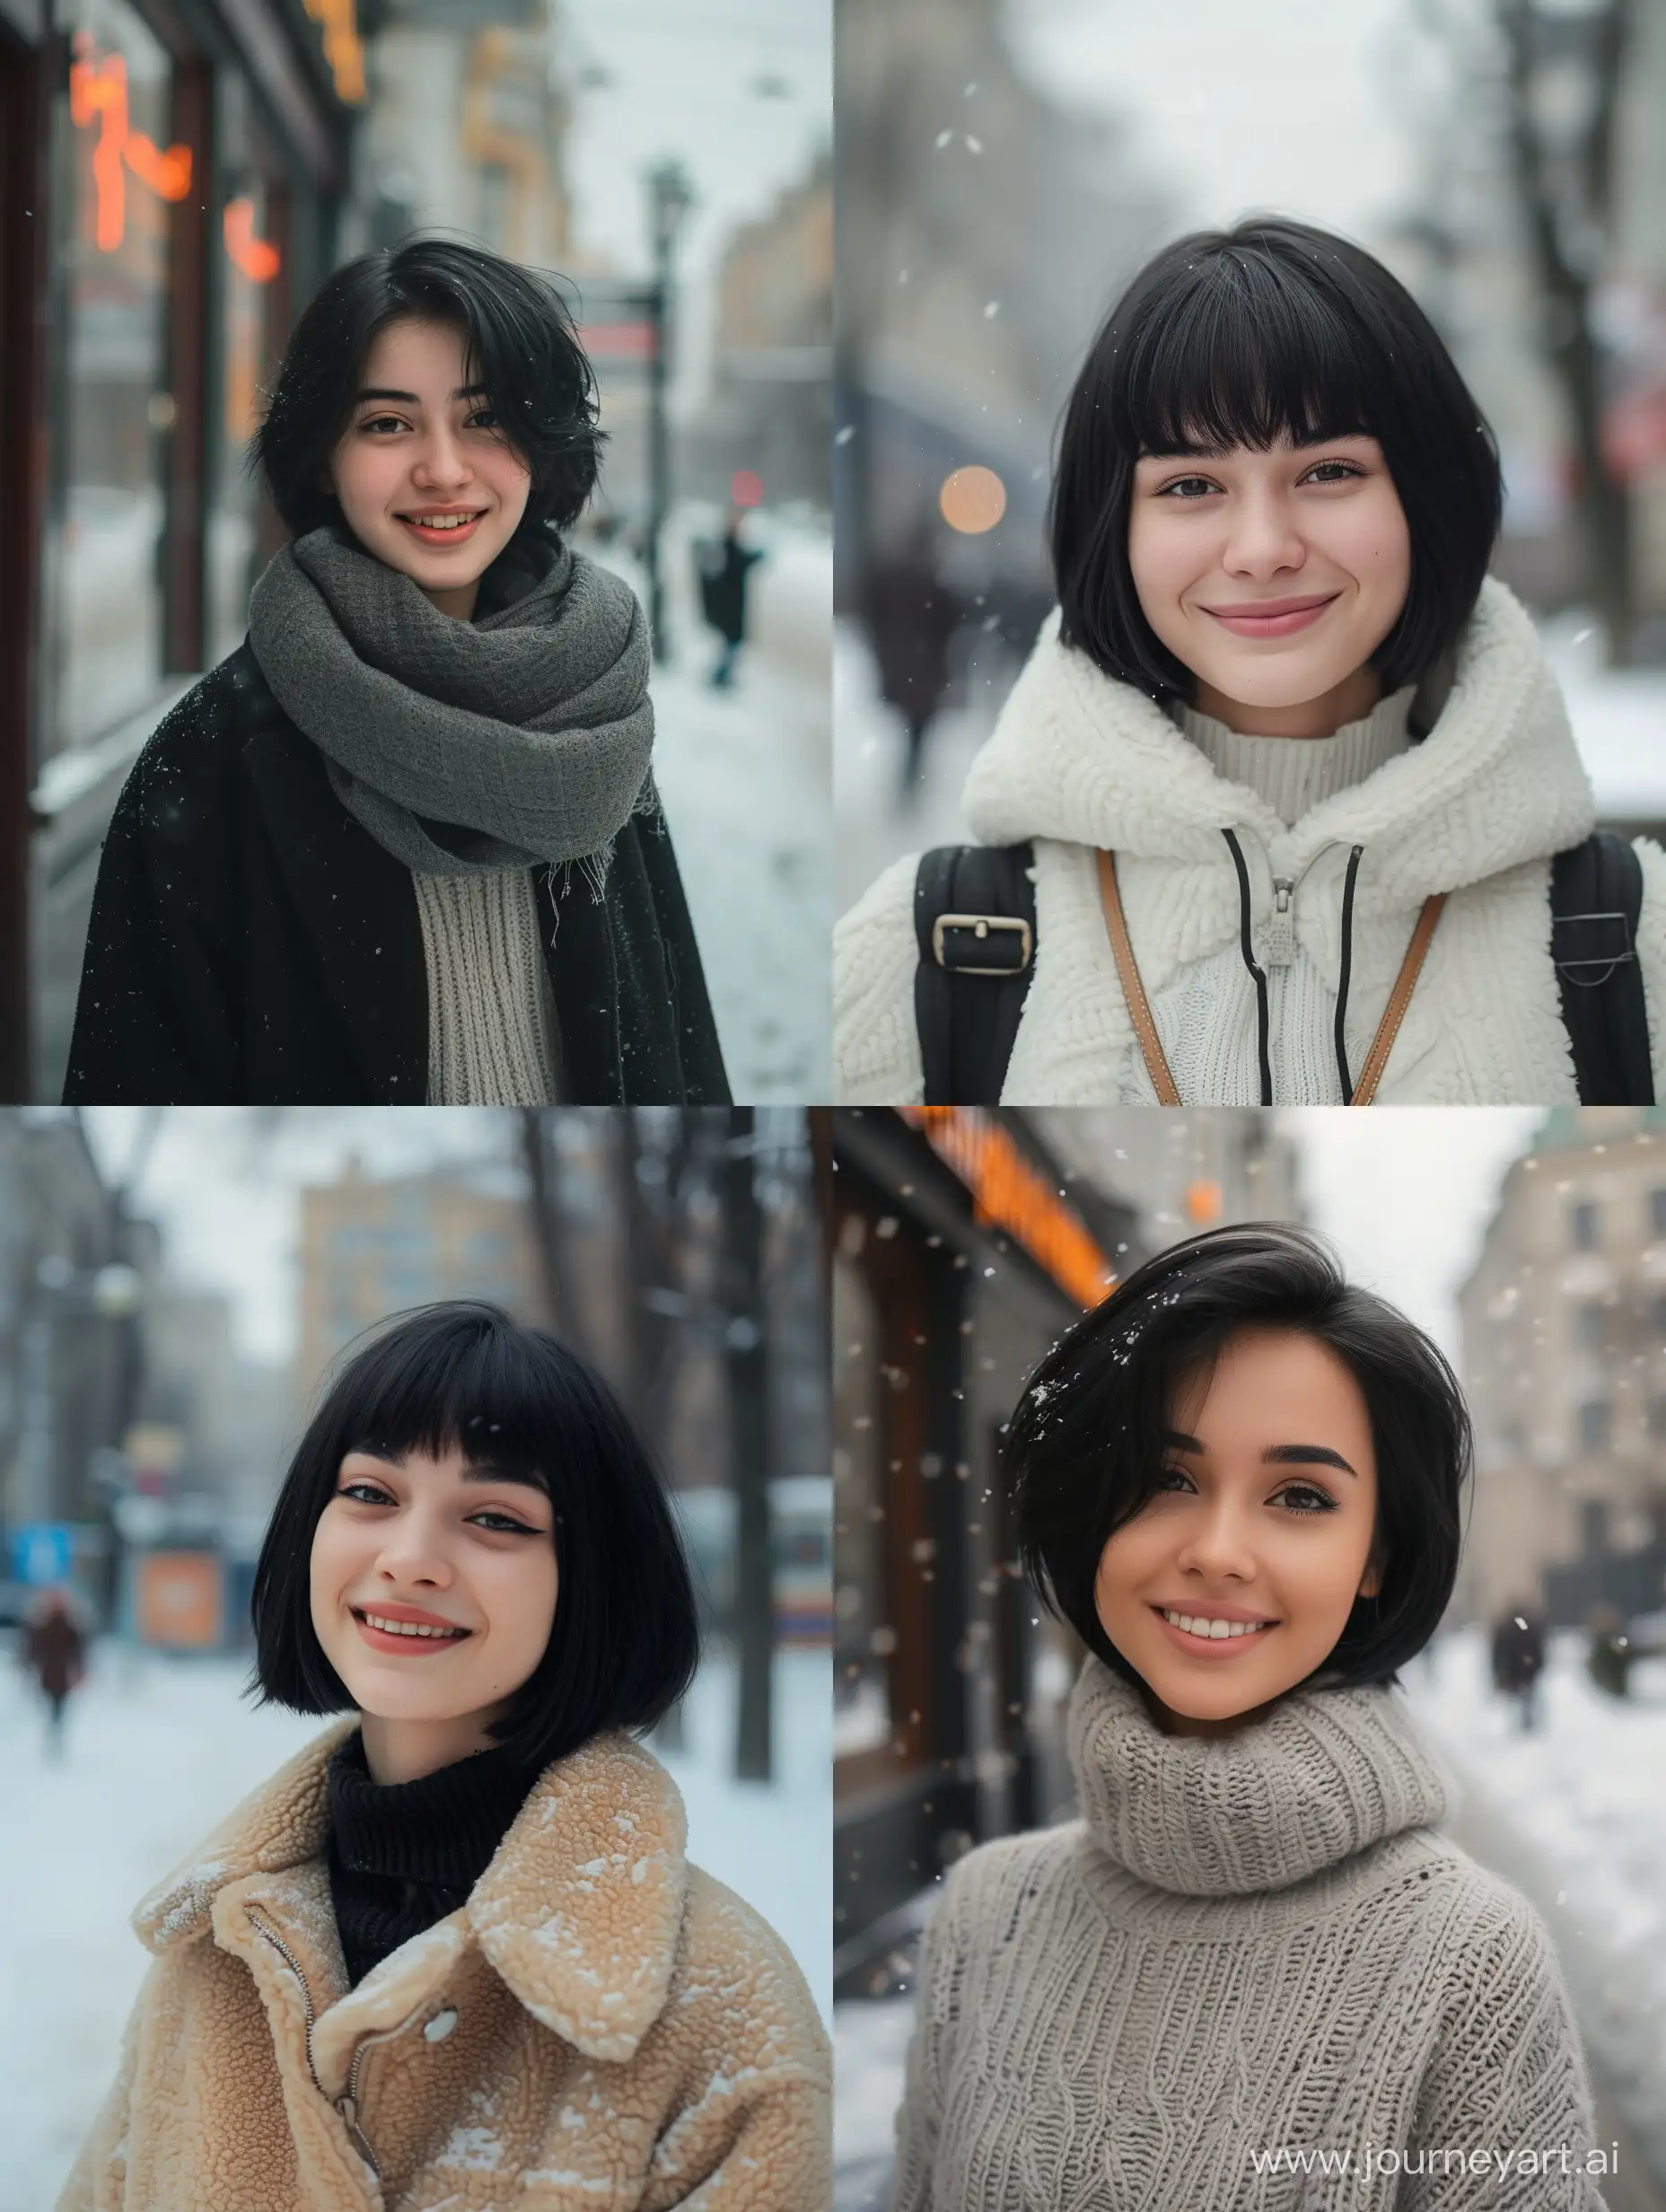 Smiling-Russian-Teen-in-Winter-Moscow-Street-Portrait